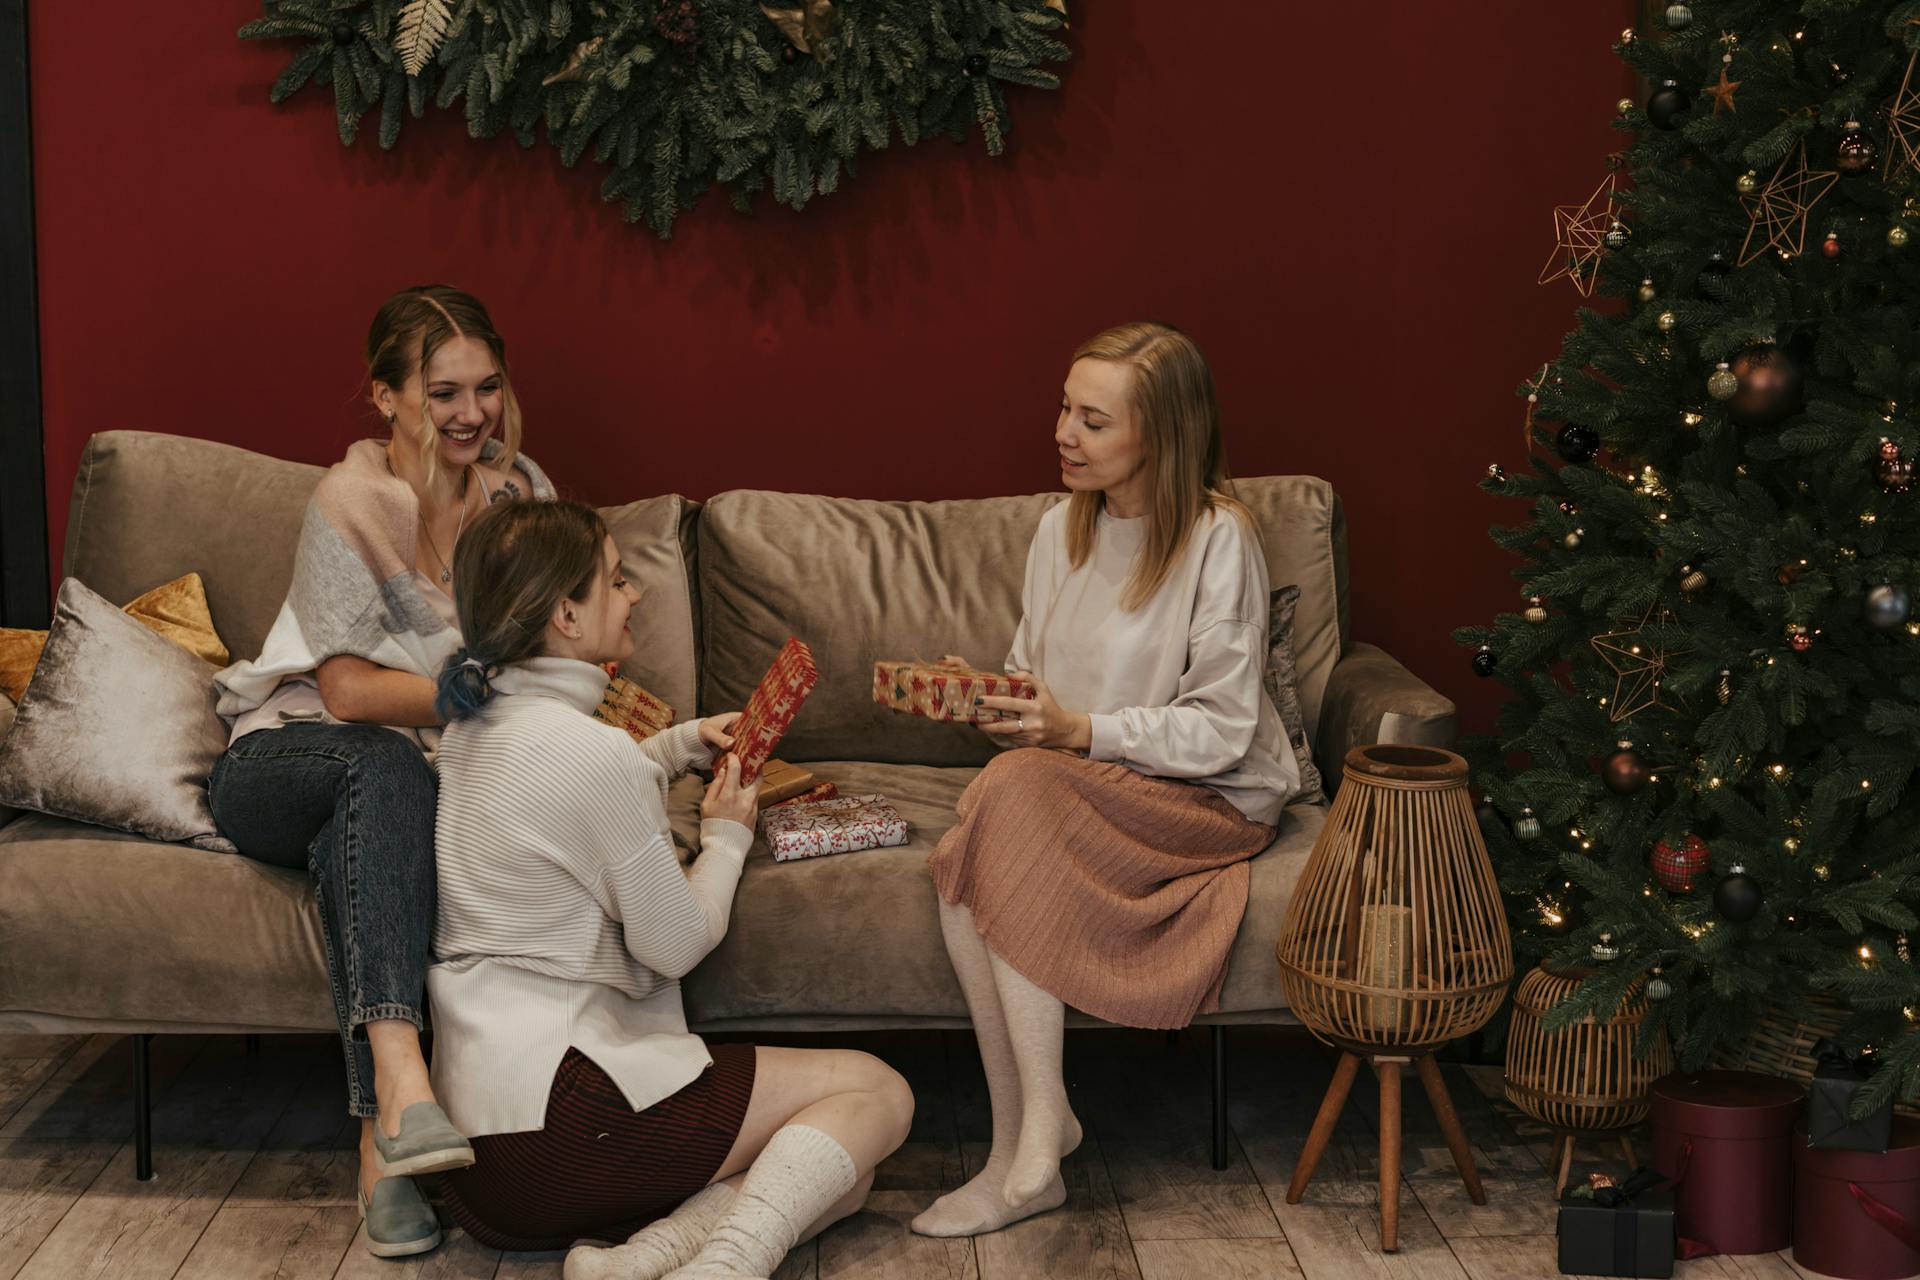 Women exchanging Christmas presents | Source: Pexels